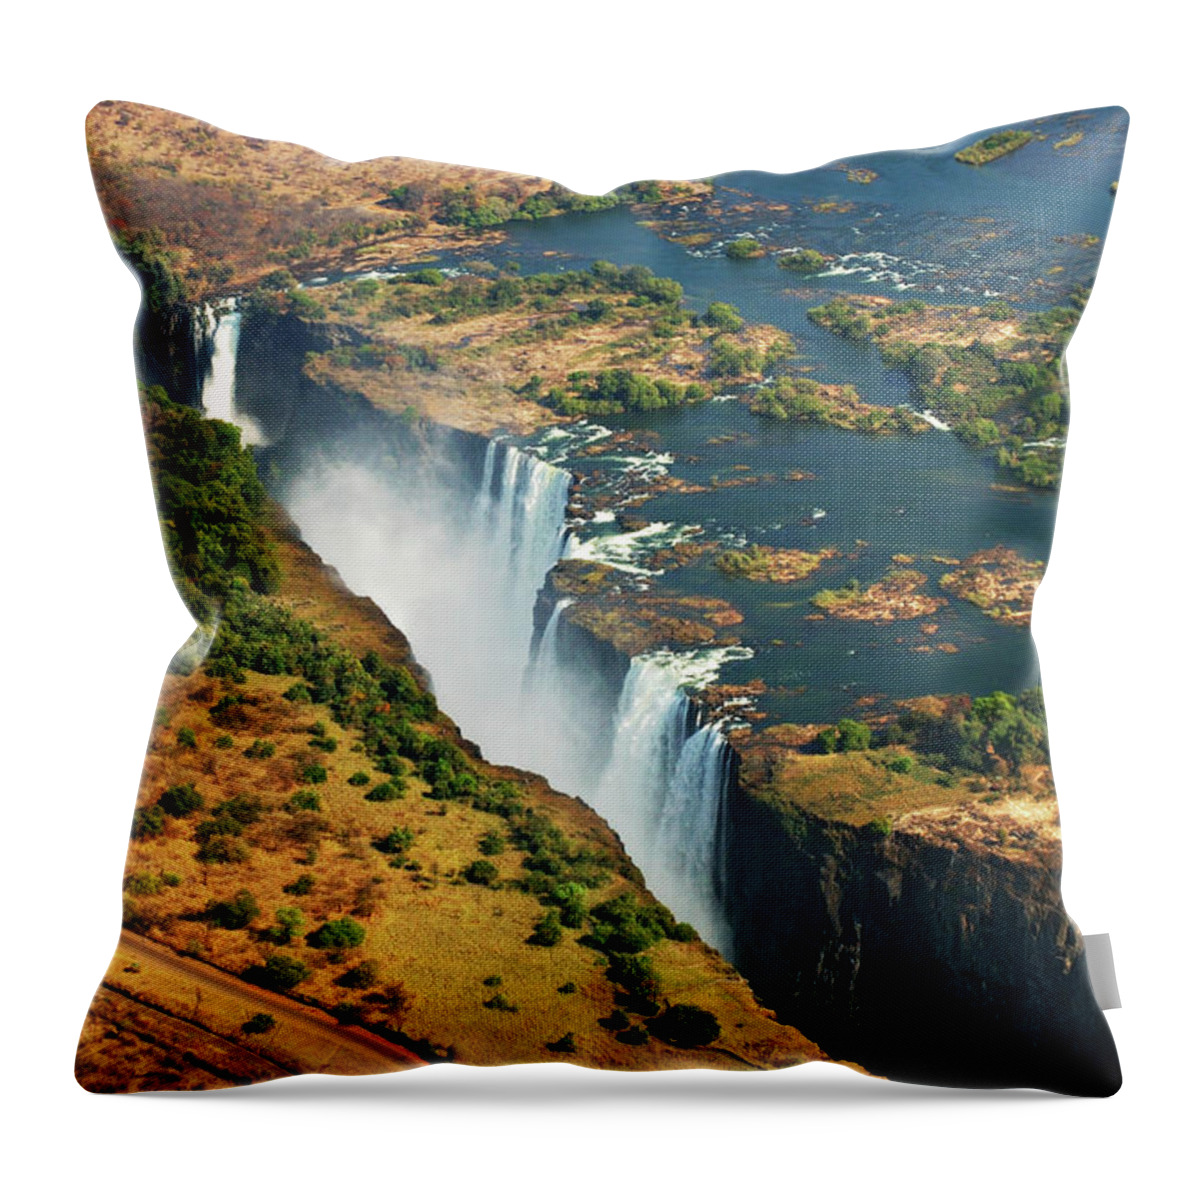 Scenics Throw Pillow featuring the photograph Victoria Falls, Zambia by © Pascal Boegli